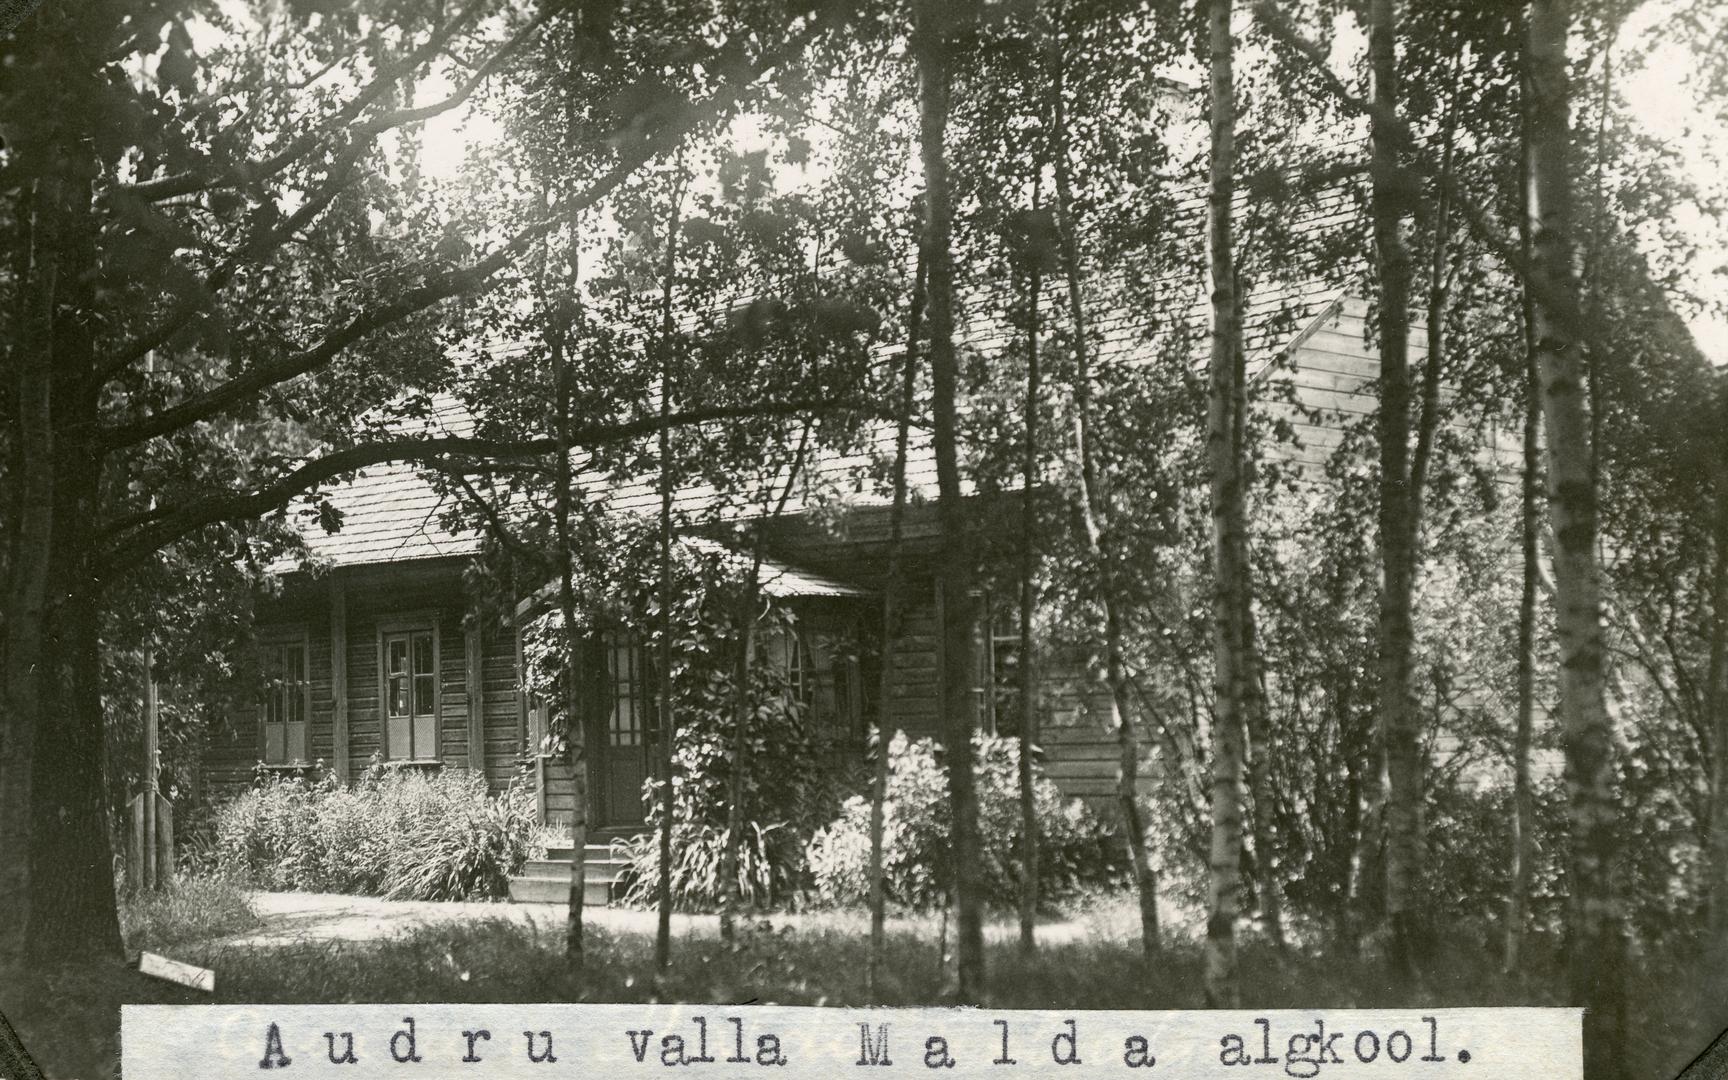 Audru rural municipality Malda Algkooli building